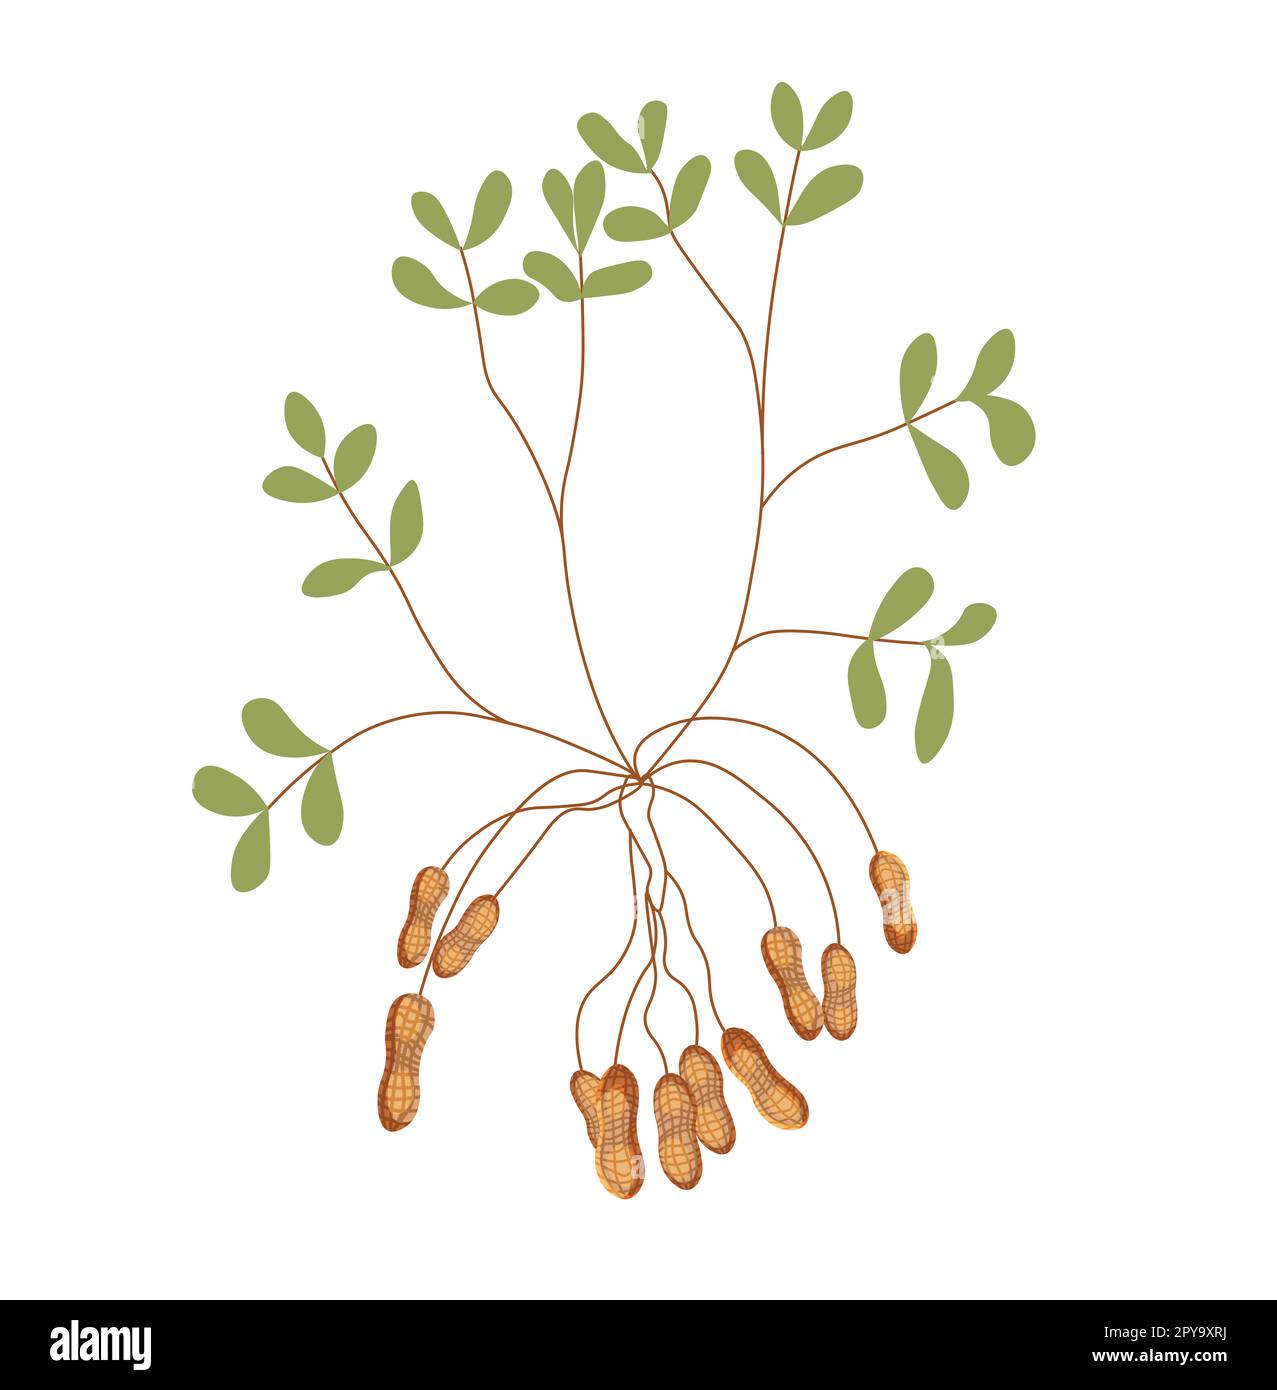 peanut plant life cycle